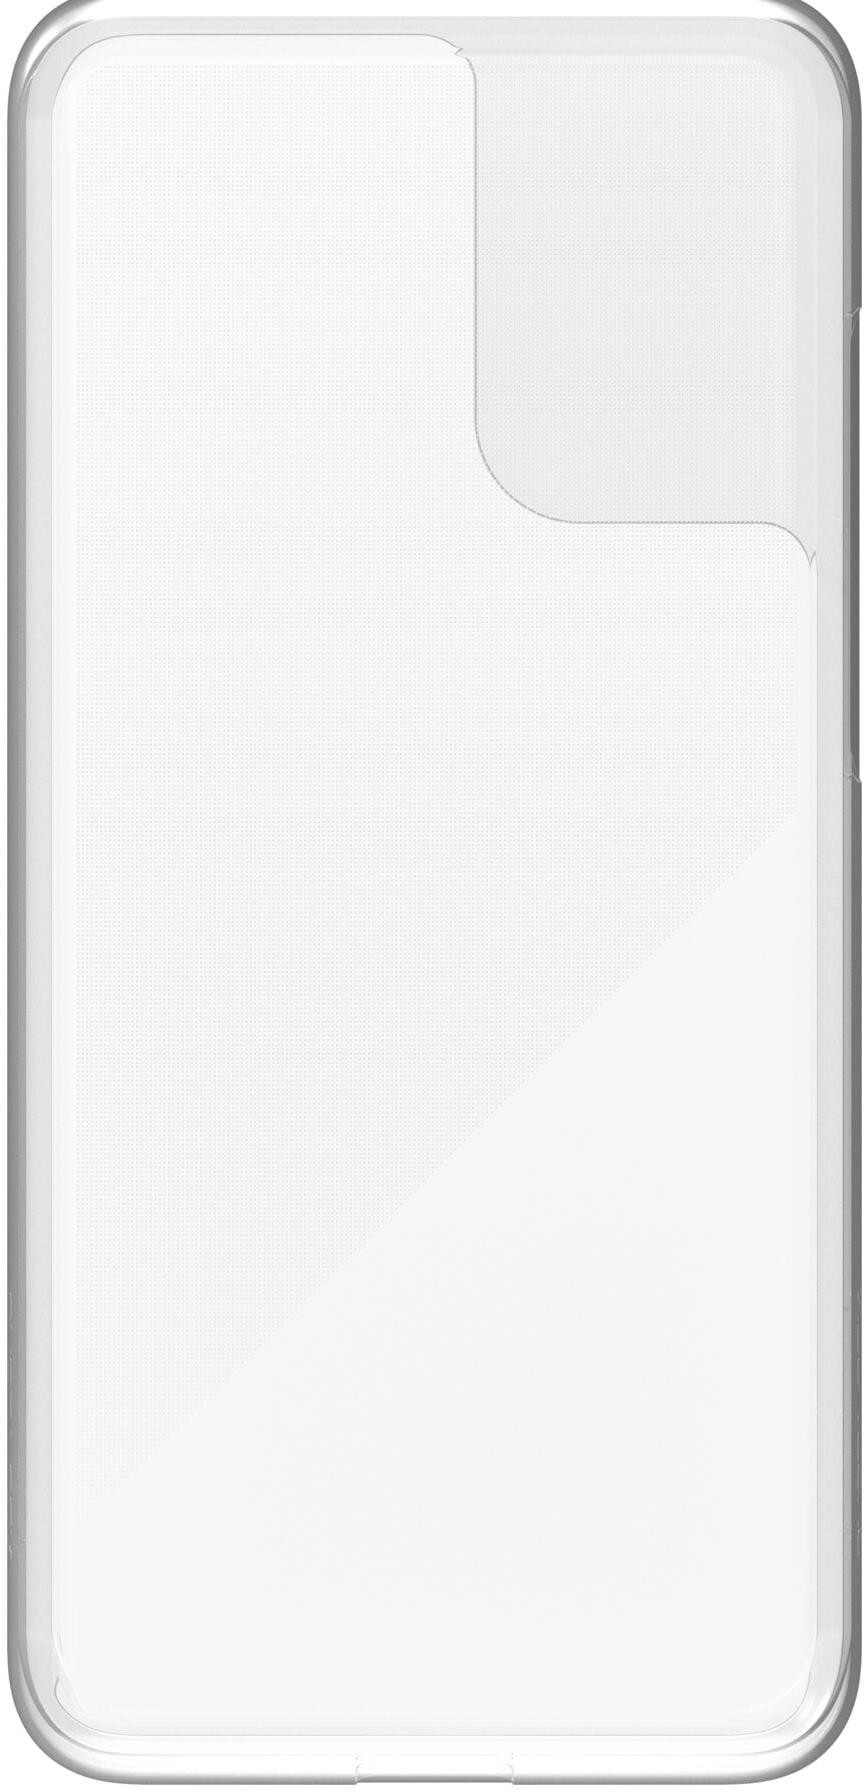 Poncho - Samsung Galaxy S20+ image 0